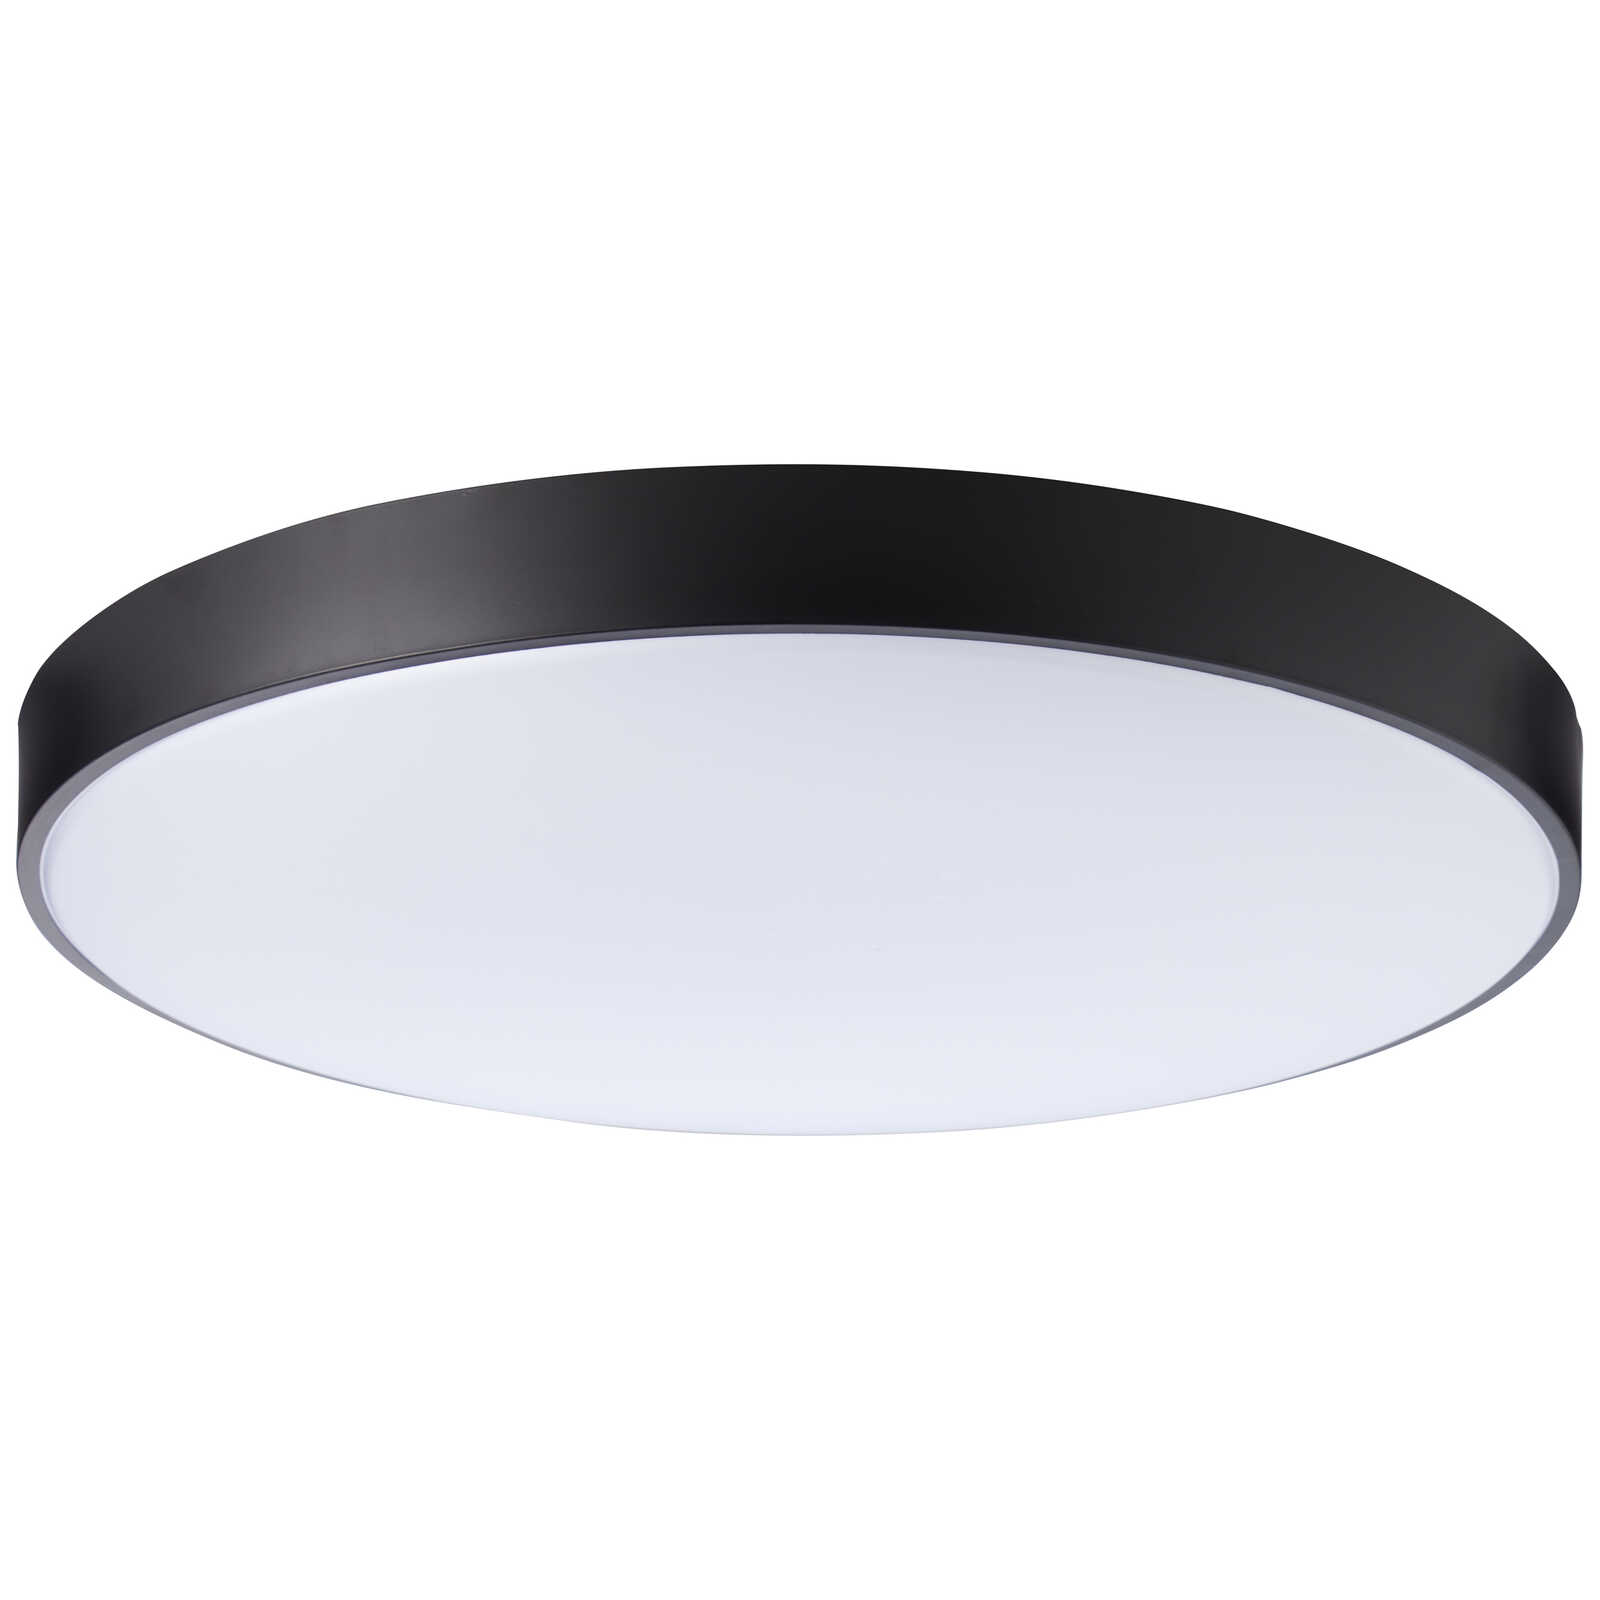             Plastic ceiling light - Niklas 11 - Black
        